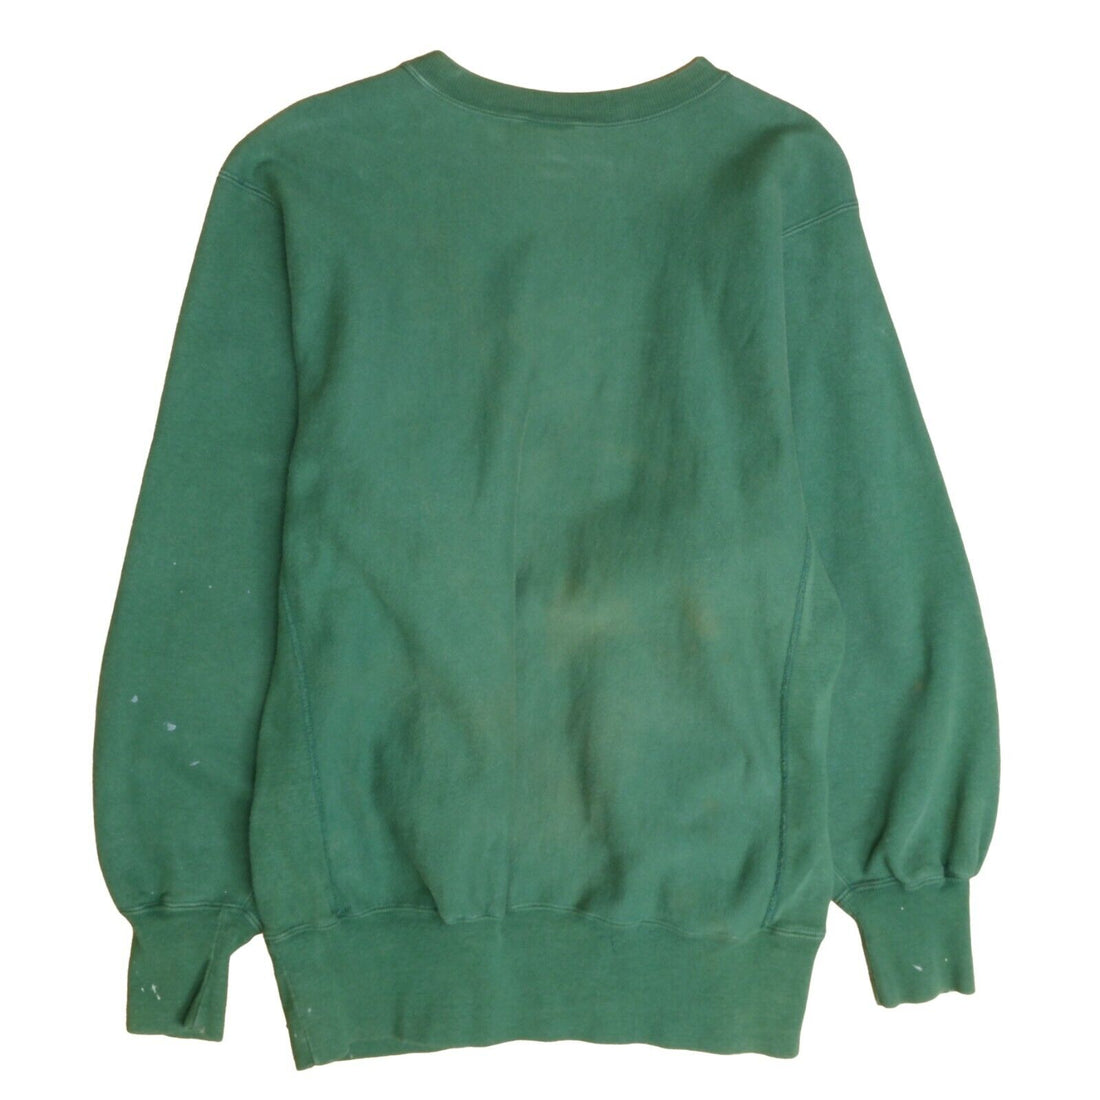 Vintage Mountain School Champion Reverse Weave Sweatshirt Size XL Green 90s